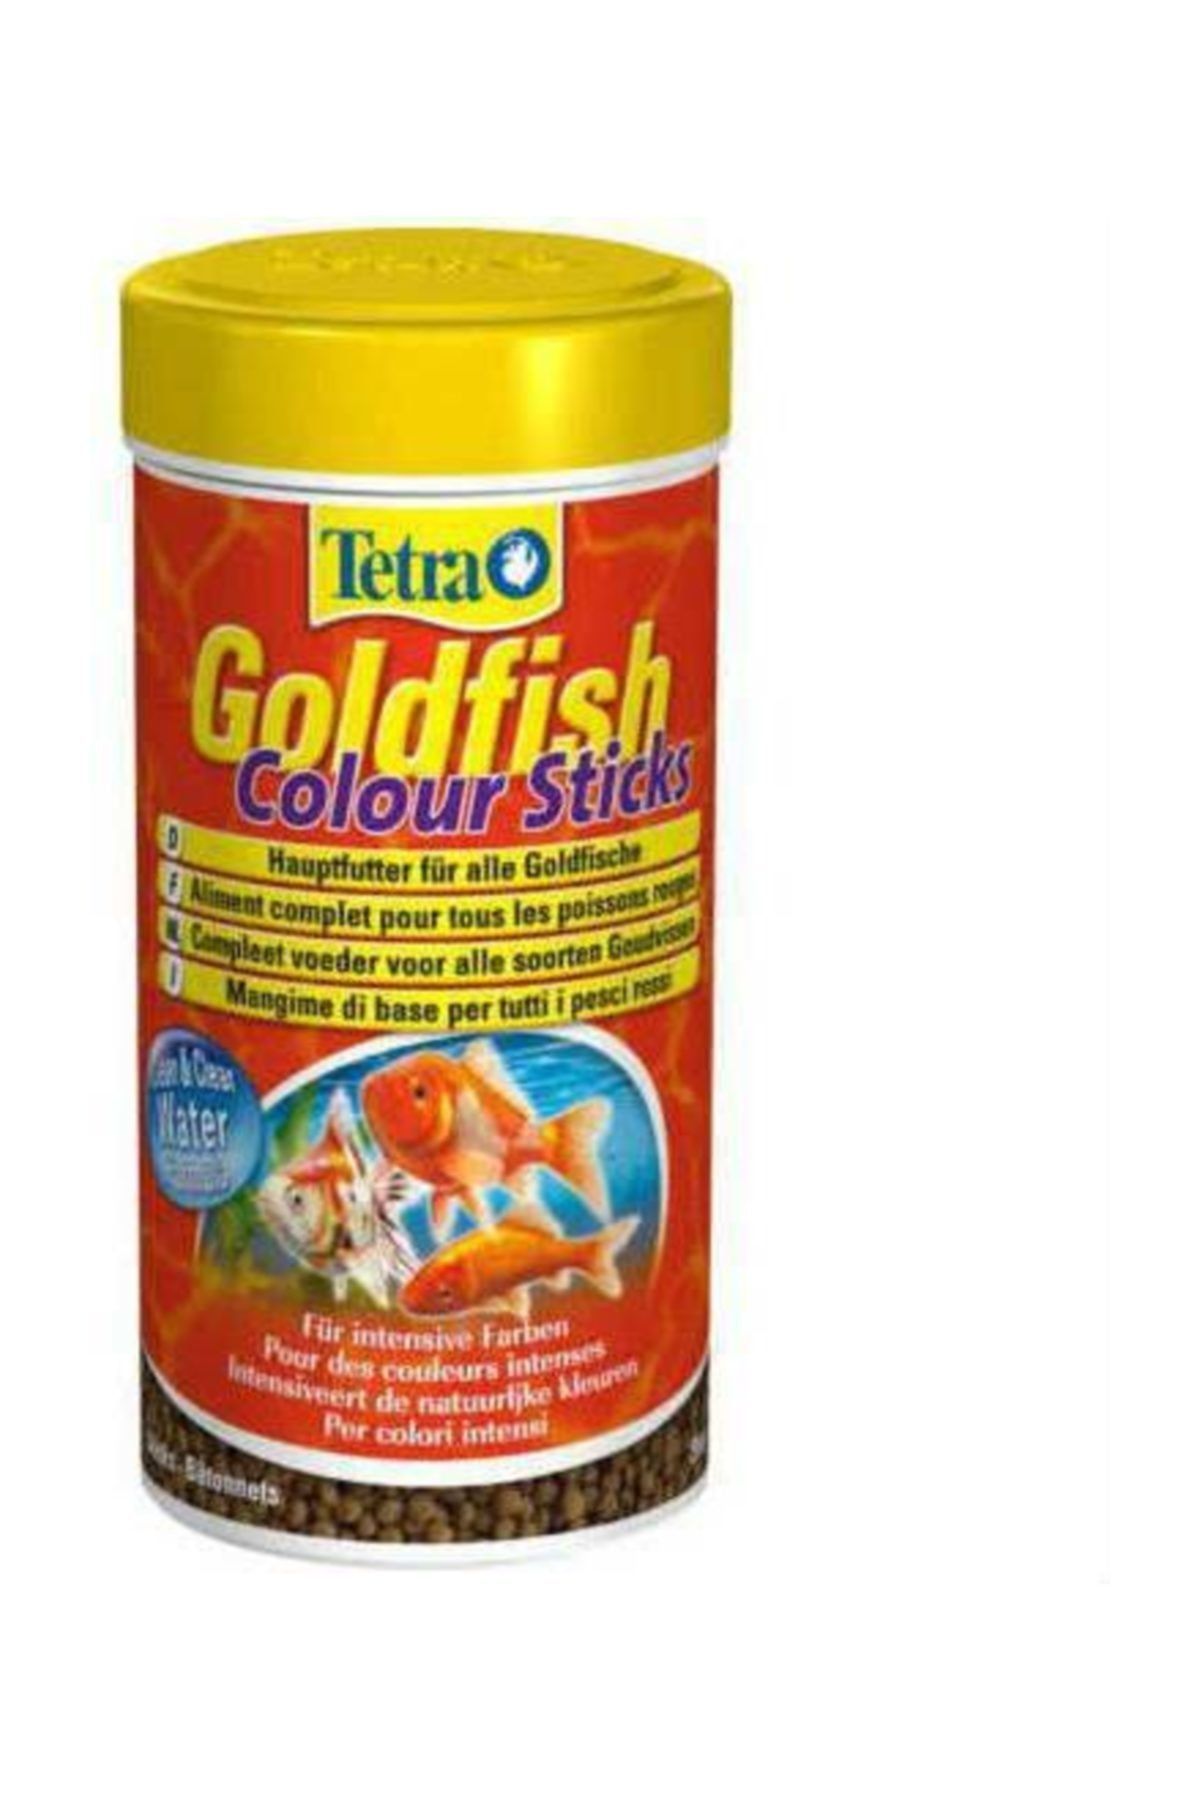 Tetra Goldfish Colour Sticks 100ml Japon